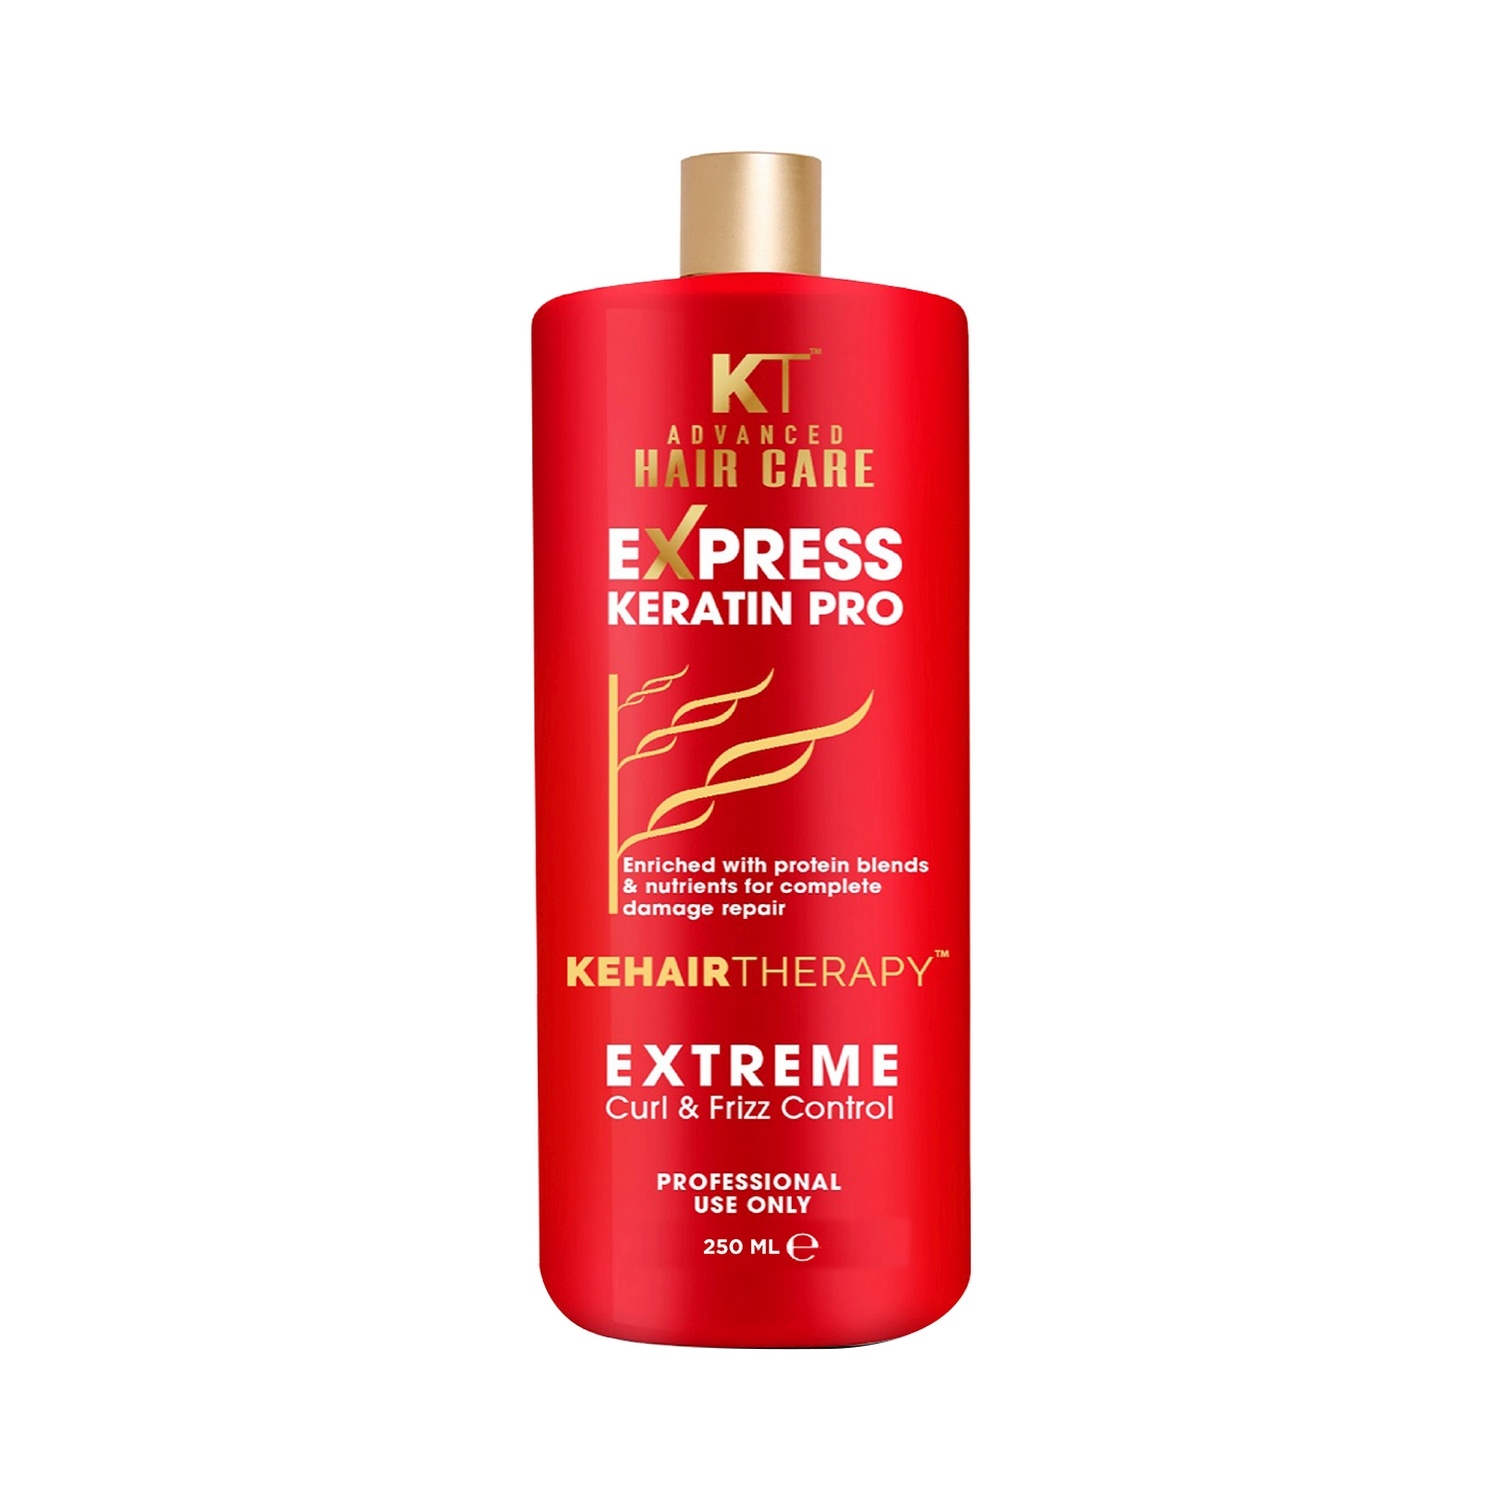 KT Professional | KT Professional Advanced Hair Care Express Keratin Pro Hair Treatment (250ml)